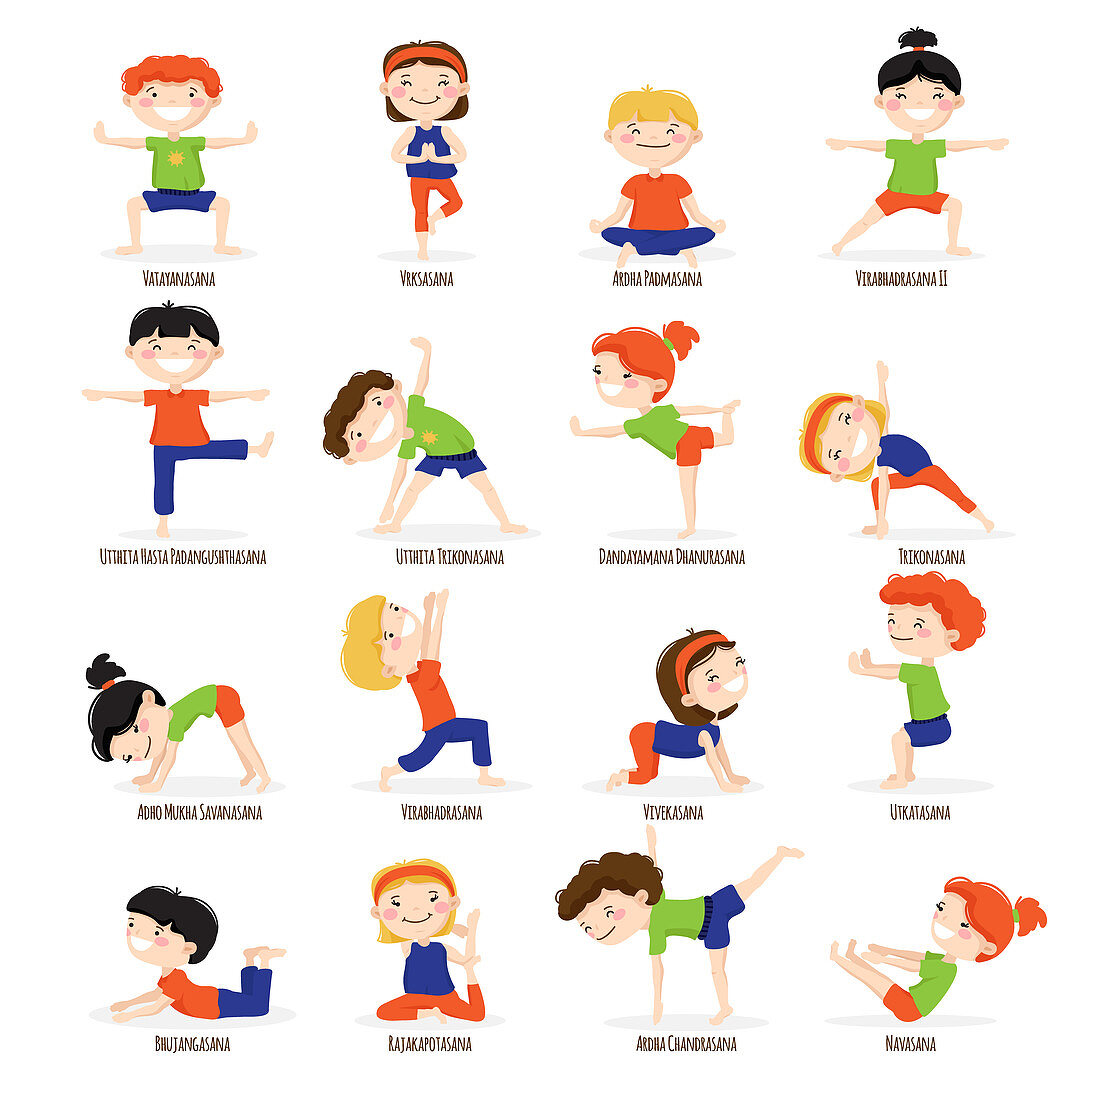 Yoga poses, illustration